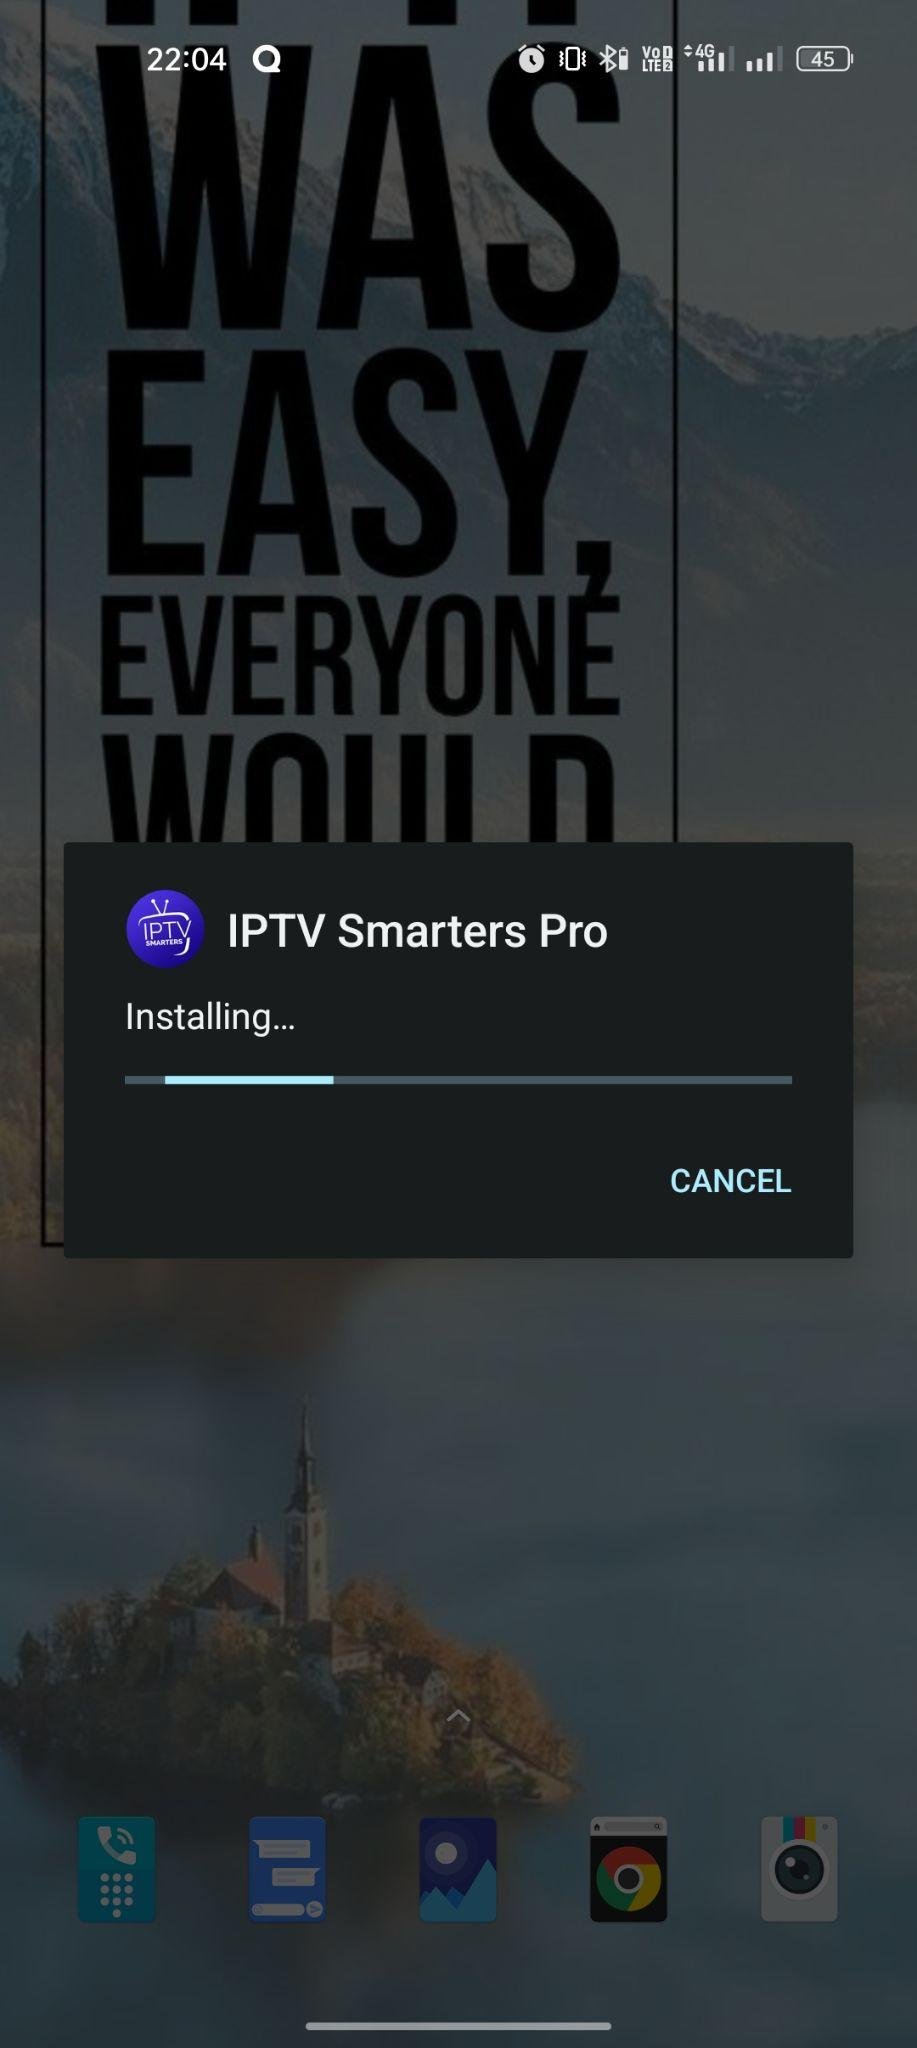 IPTV Smarters Pro apk installing